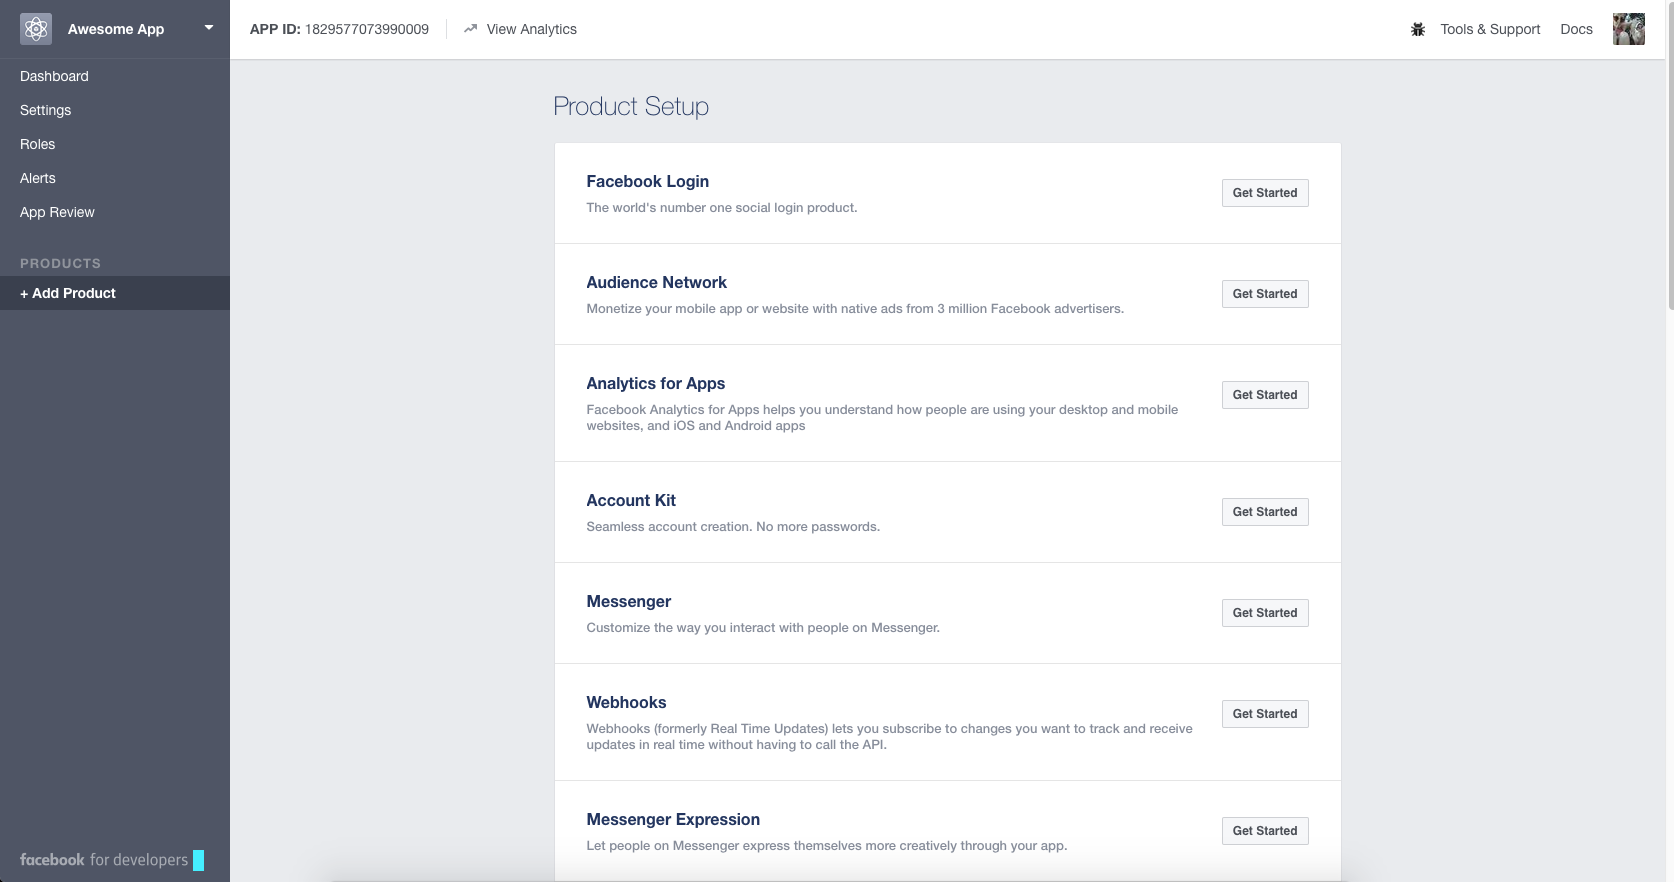 Developers Get More Options Through Facebook Limited Login